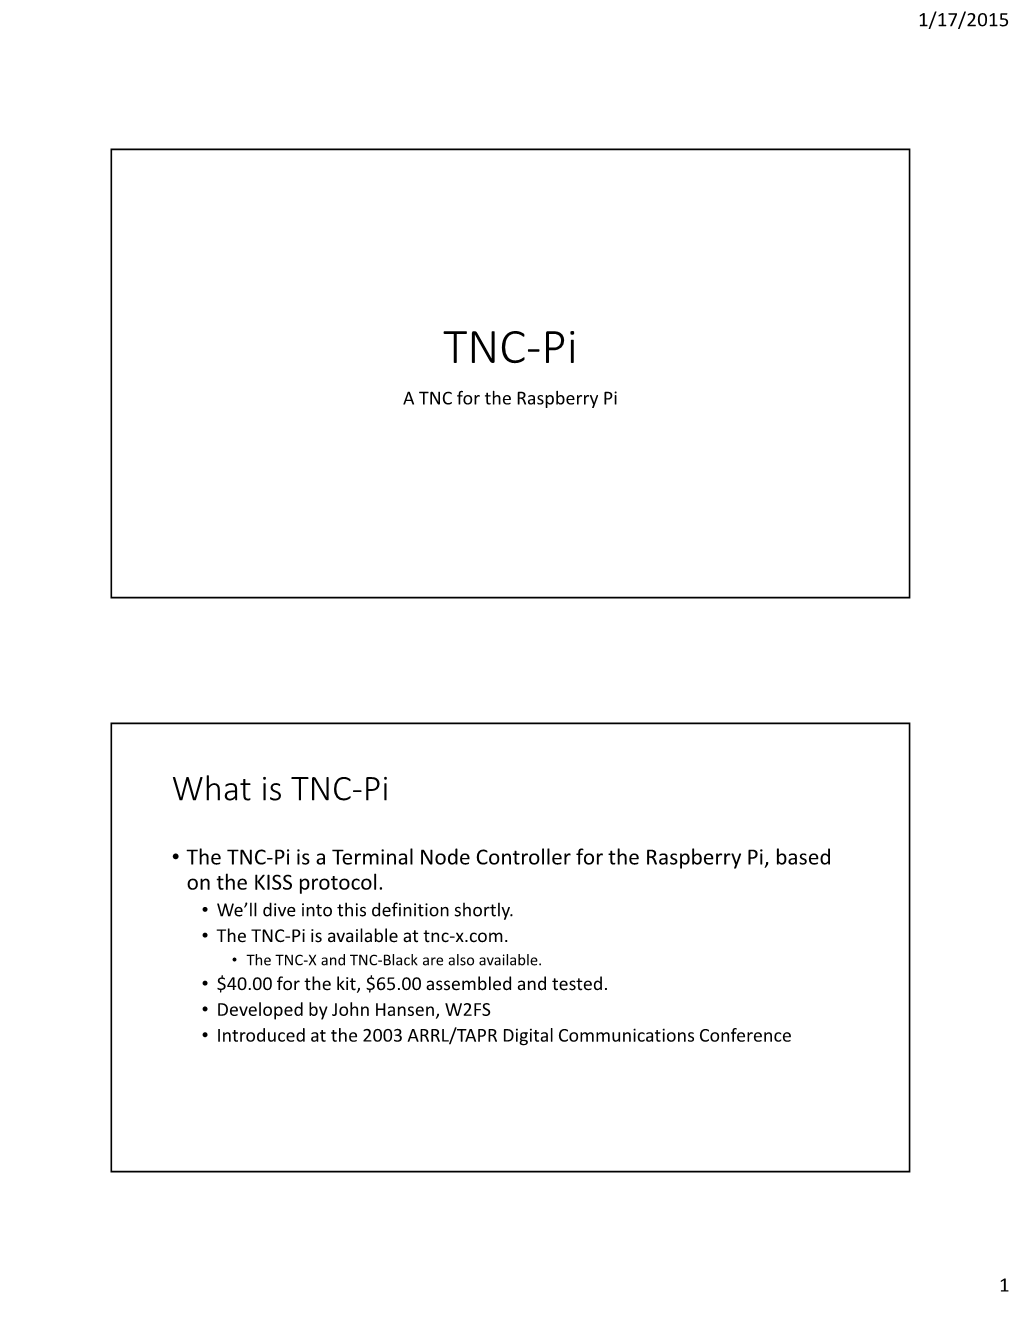 TNC-Pi a TNC for the Raspberry Pi